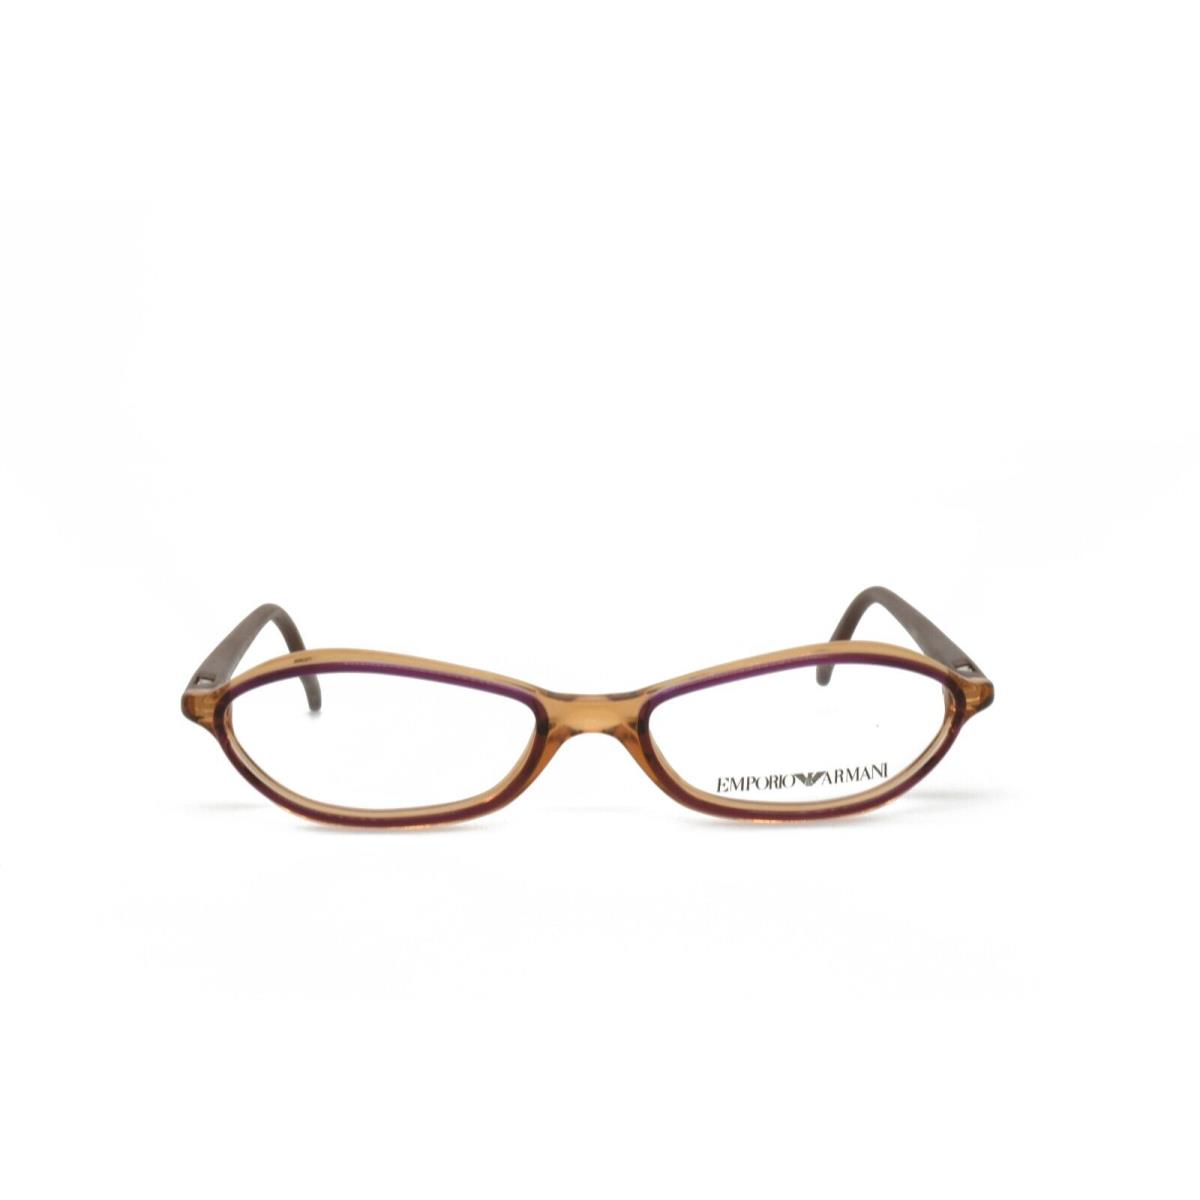 Emporio Armani 614 423 50-16-135 Brown Eyeglasses Frames